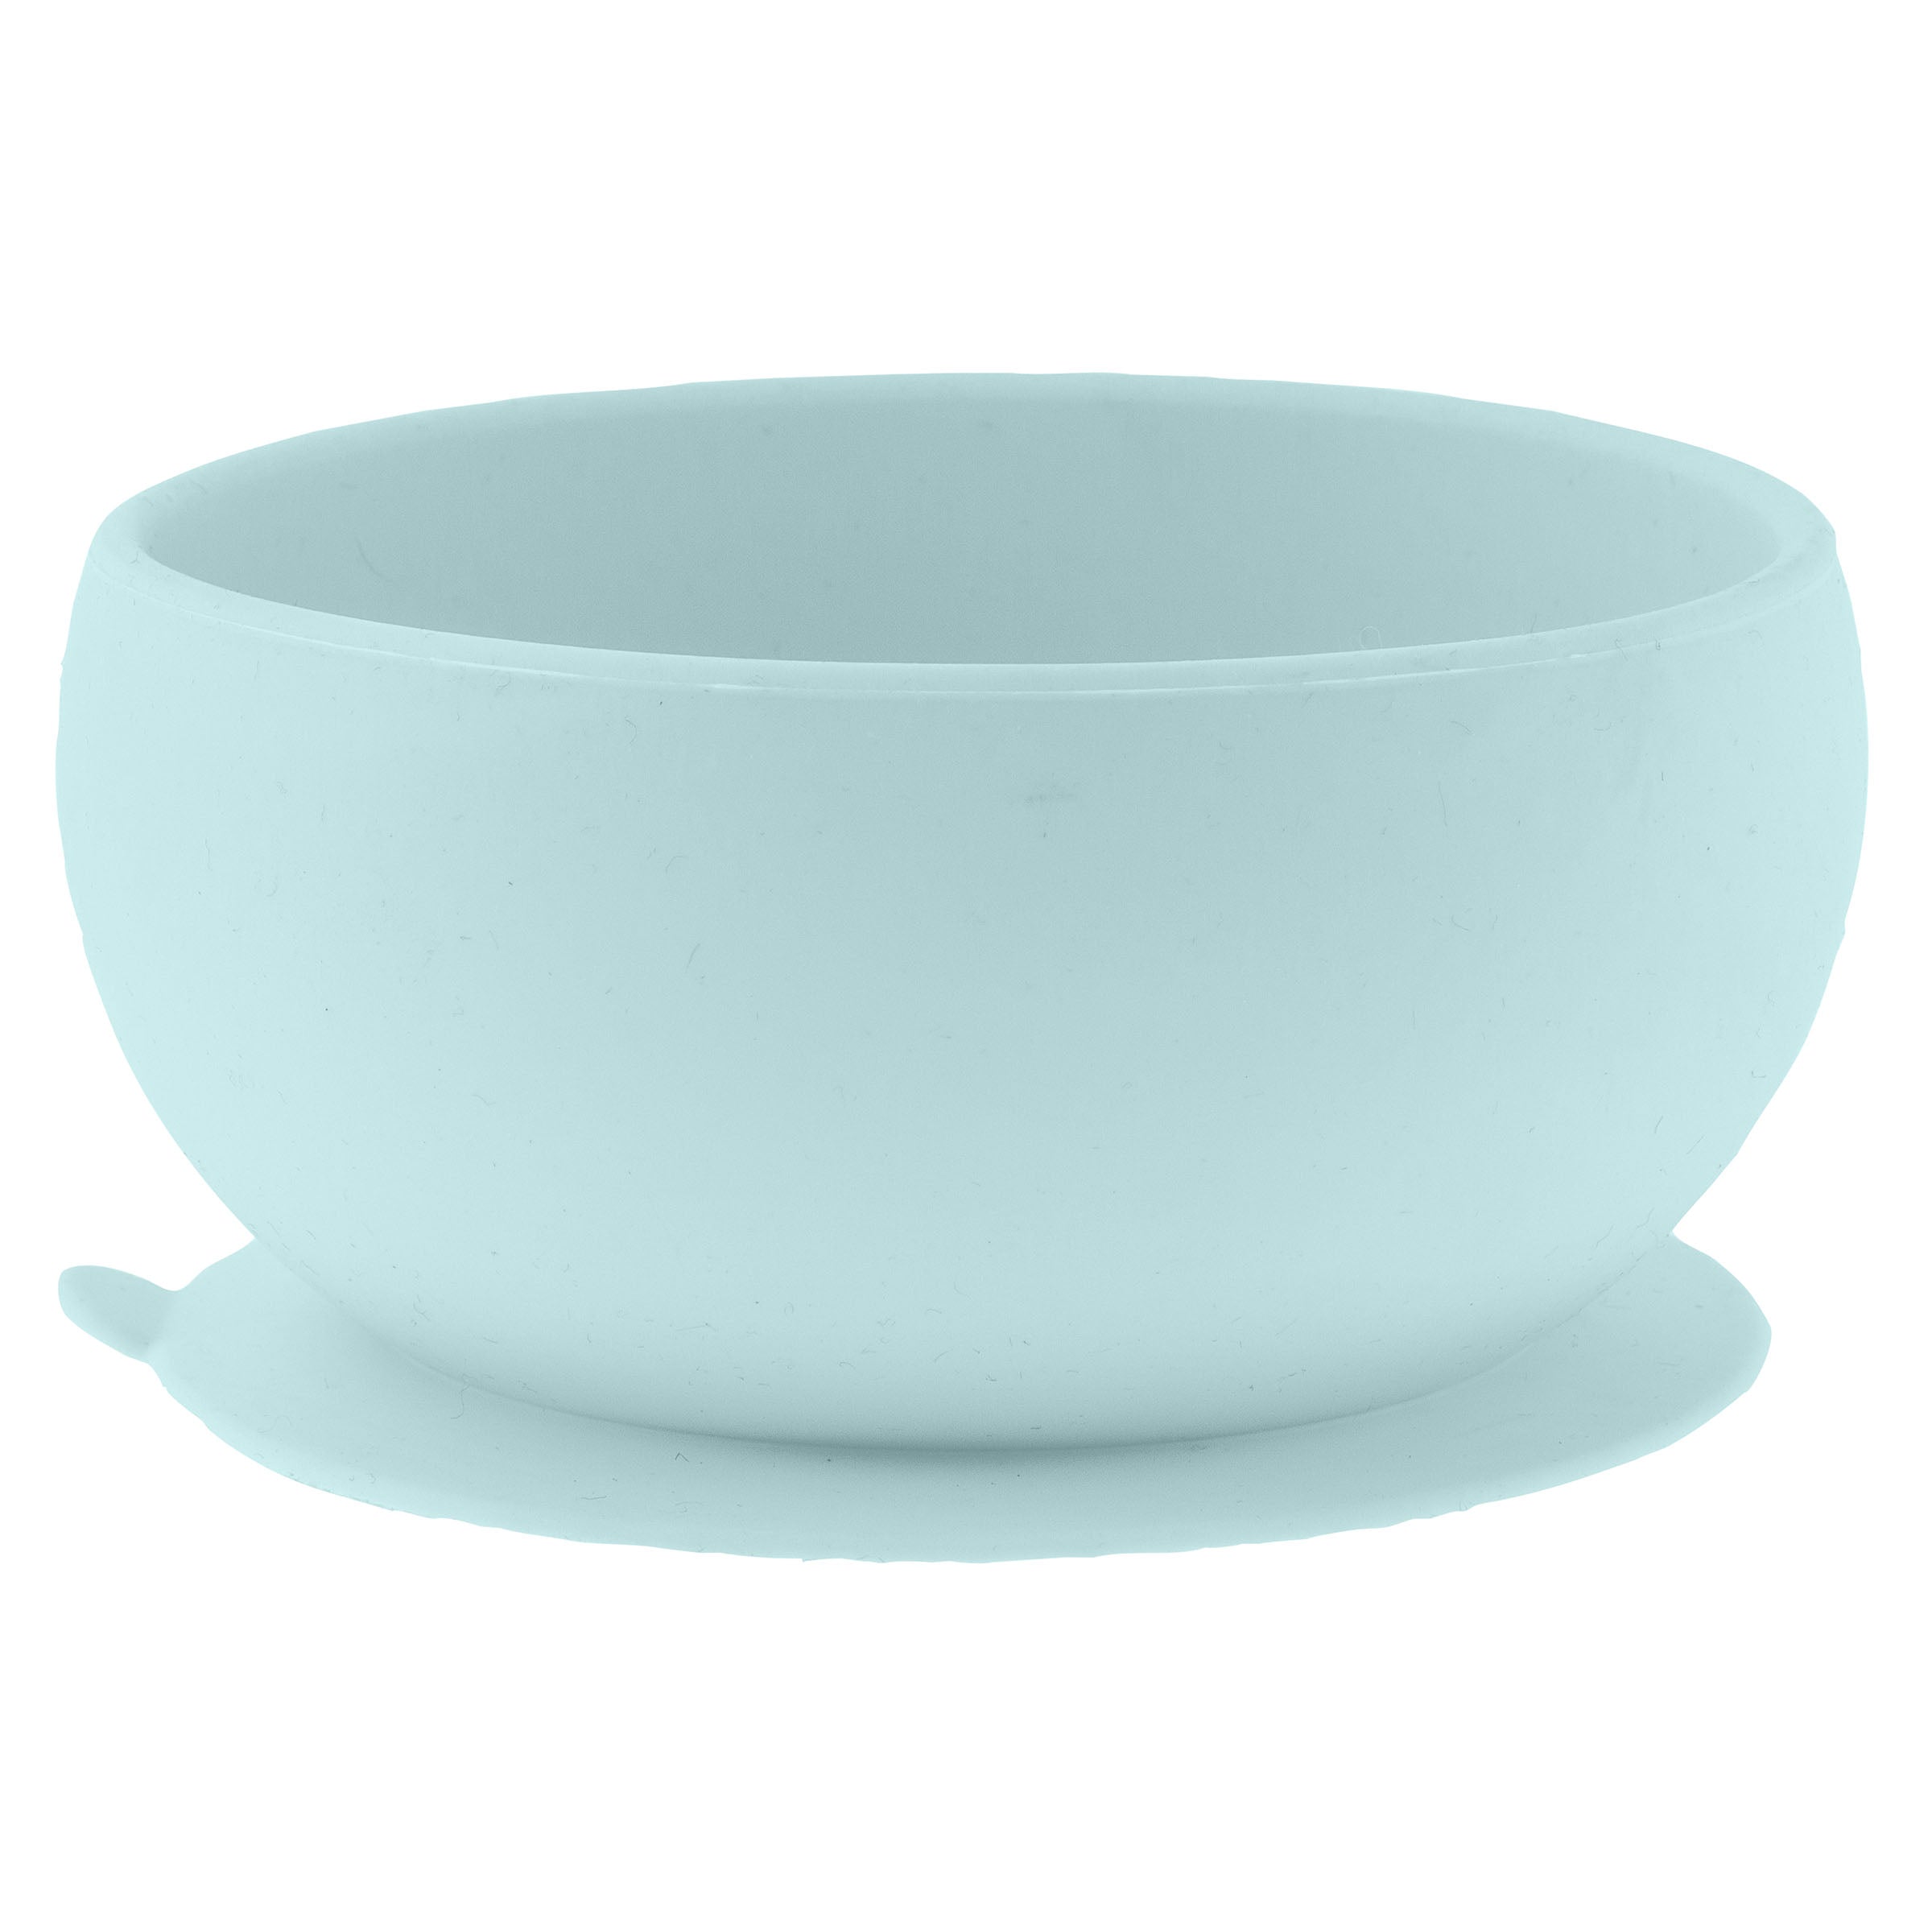 Suction Bowl 2-BOWLS / Blue + Green